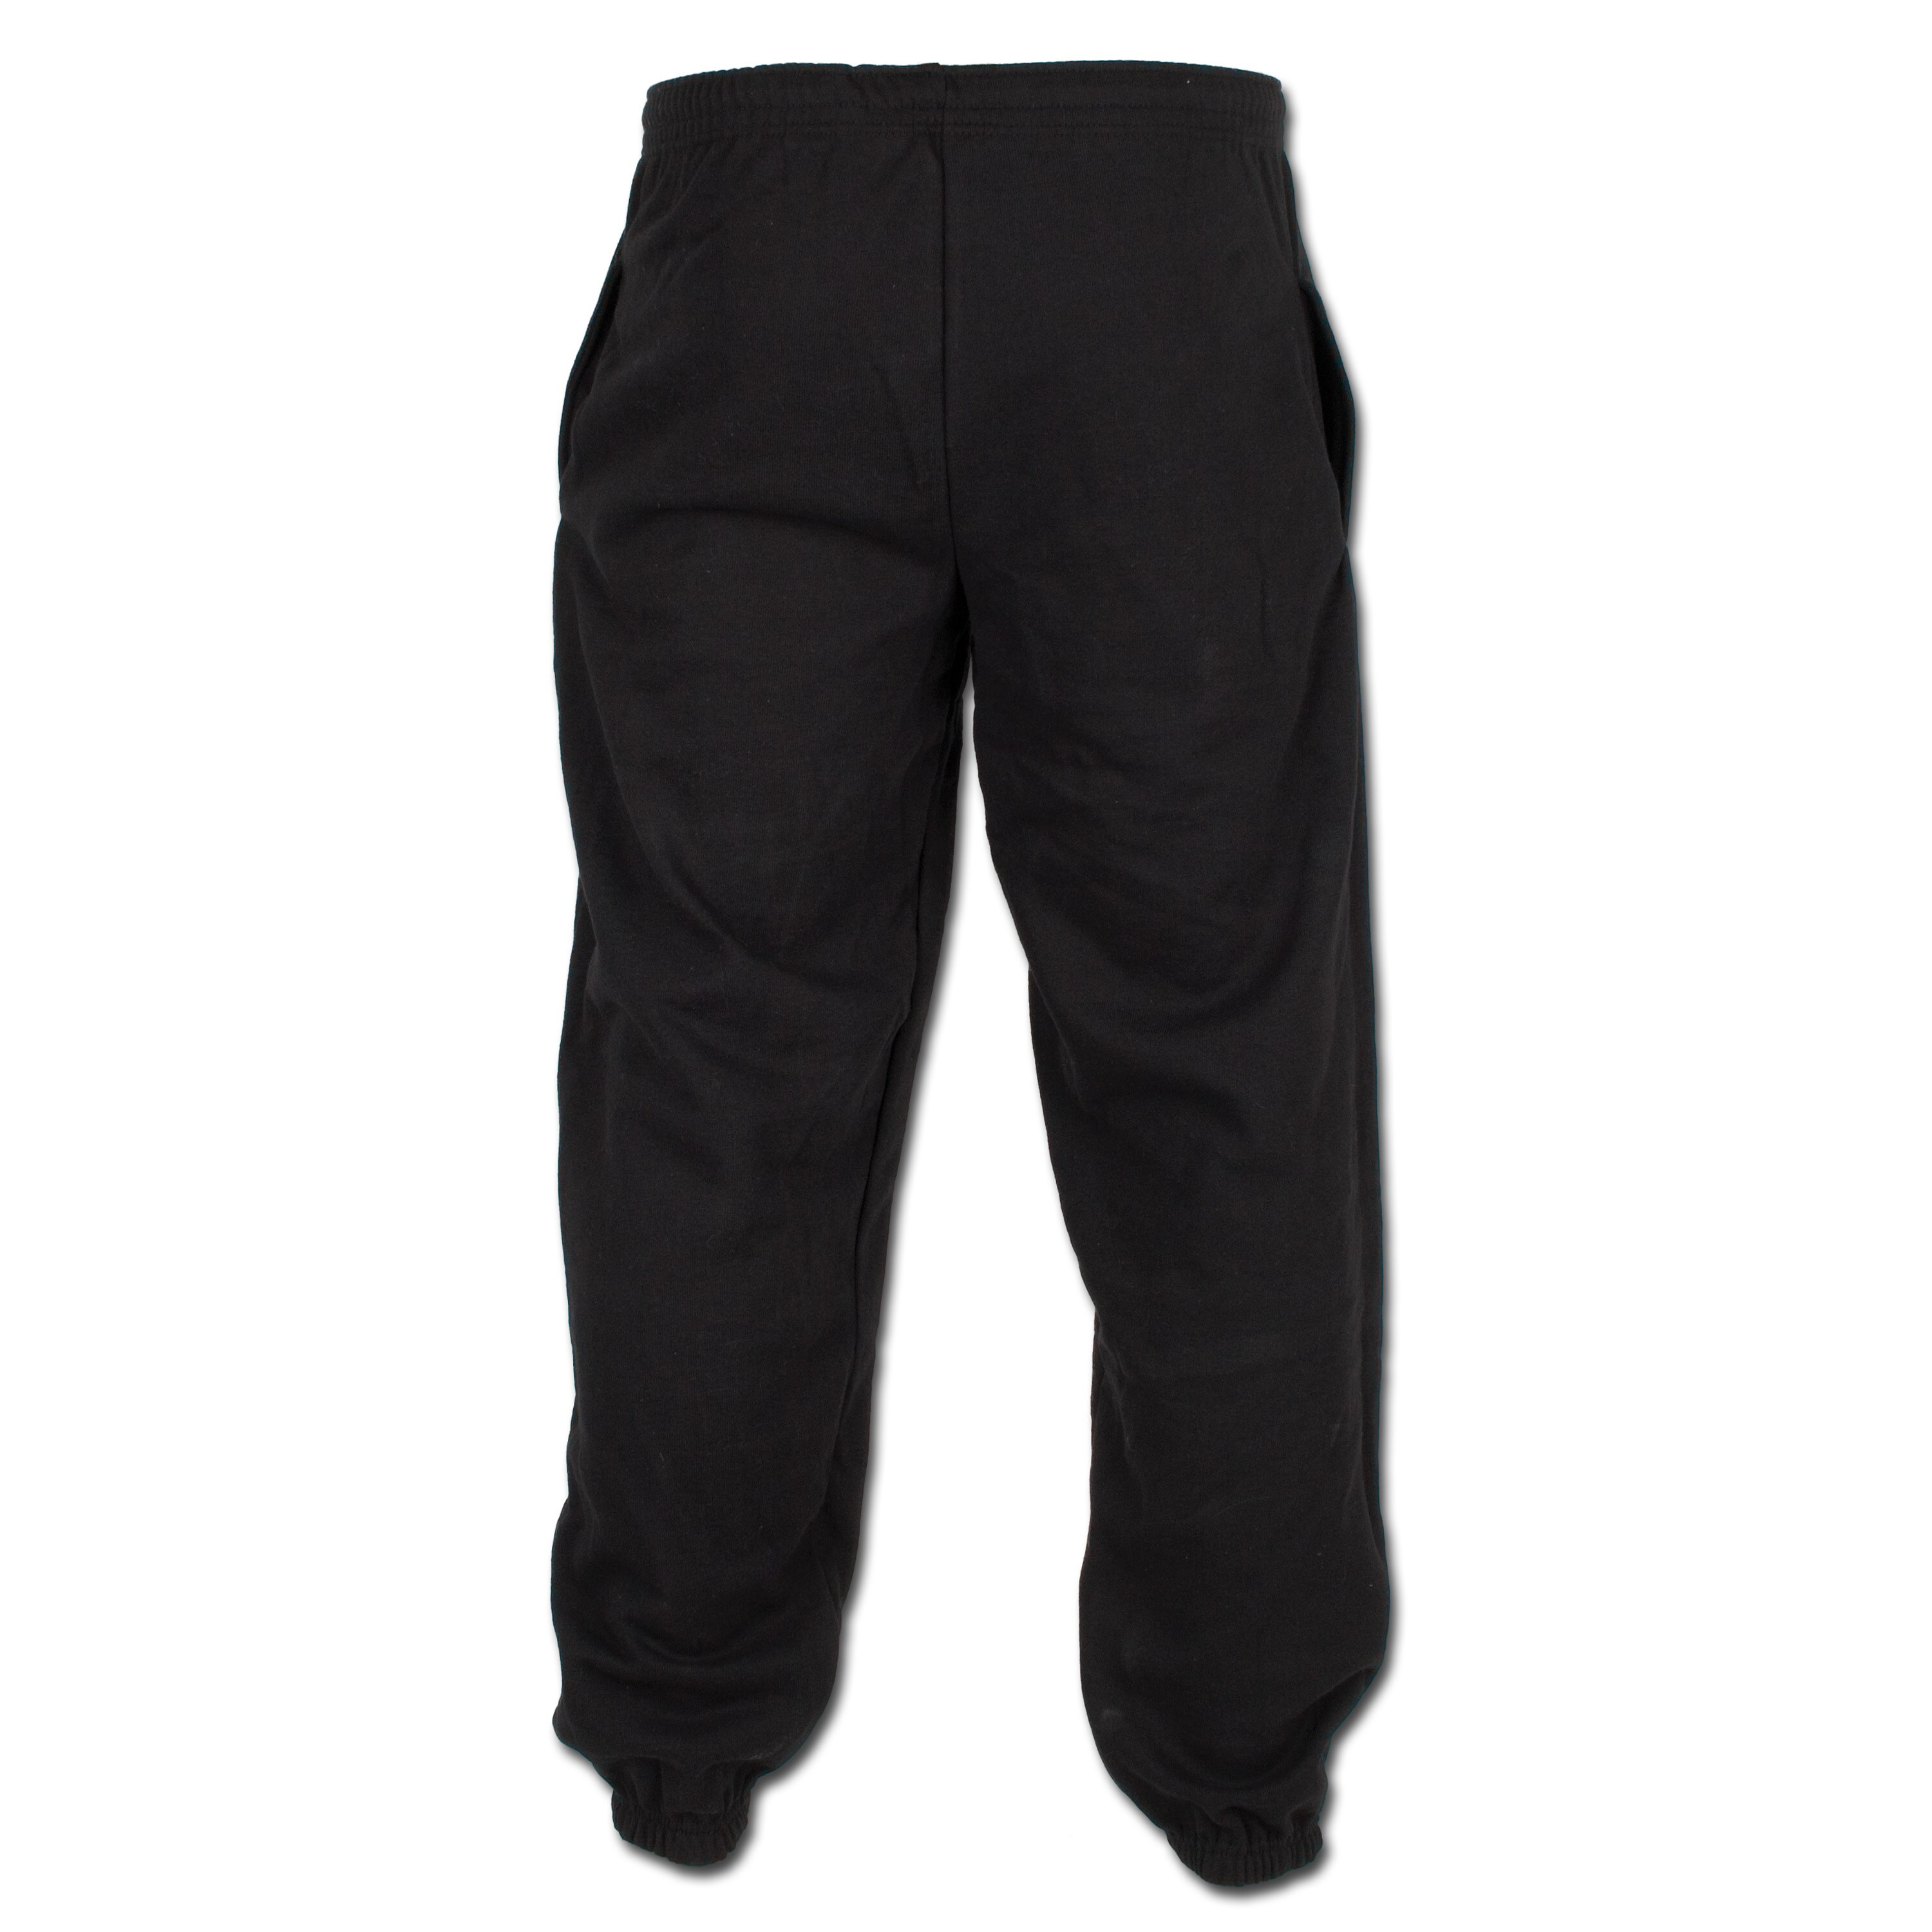 Sweatpants black | Sweatpants black | Pants | Trousers | Men | Clothing